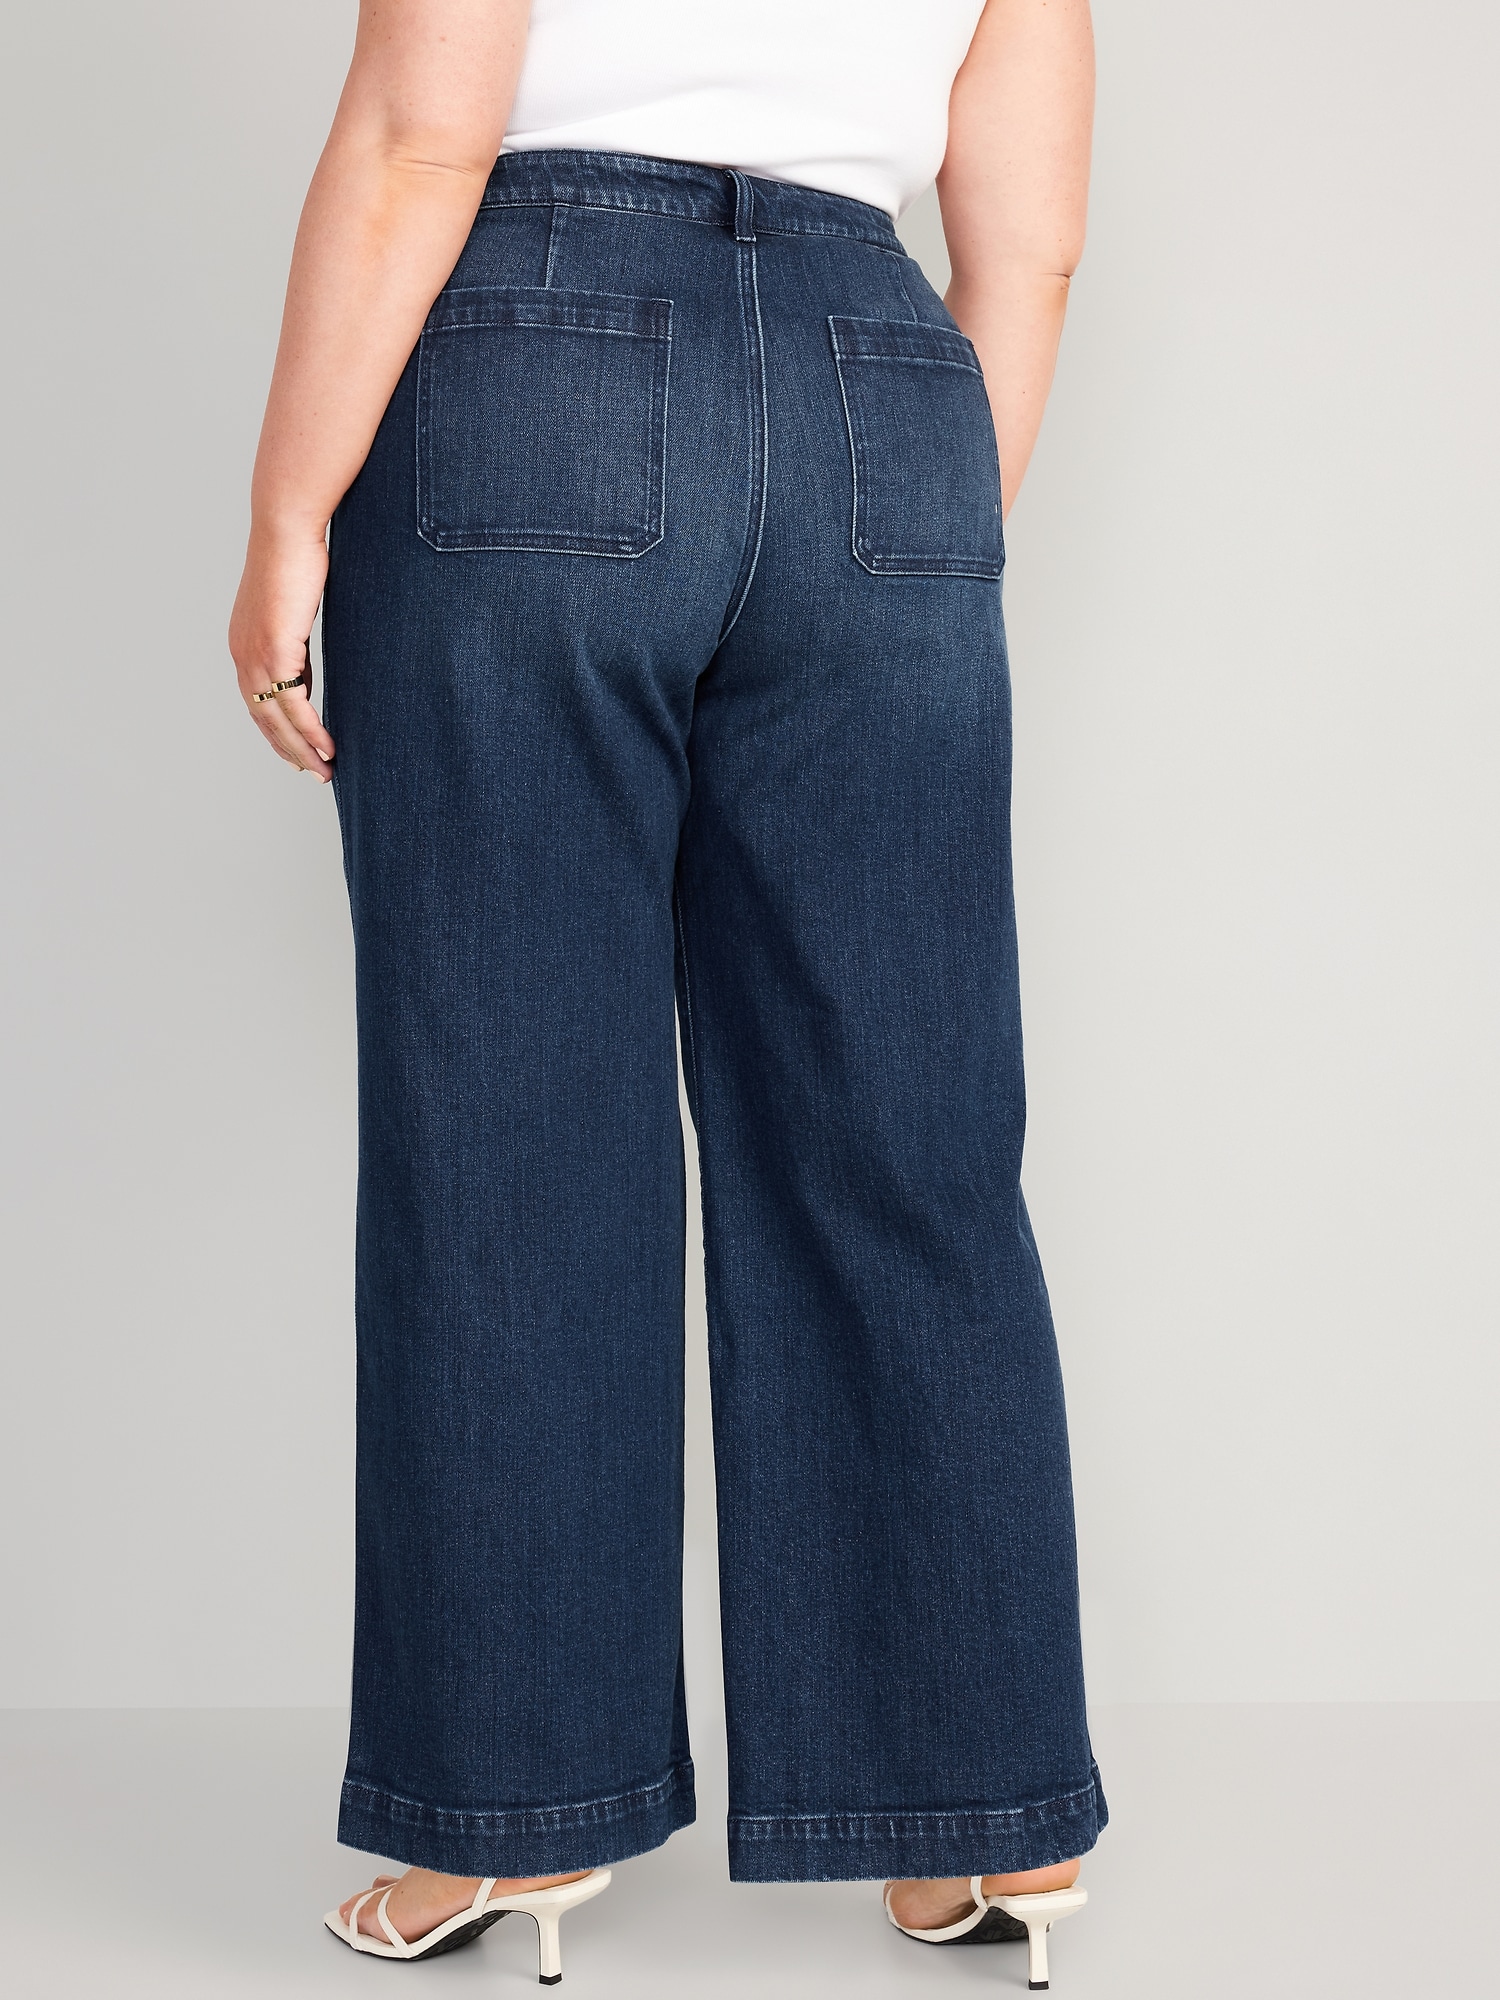 Jeans & Trousers | GAP Denim Skinny Jeans For Women | Freeup